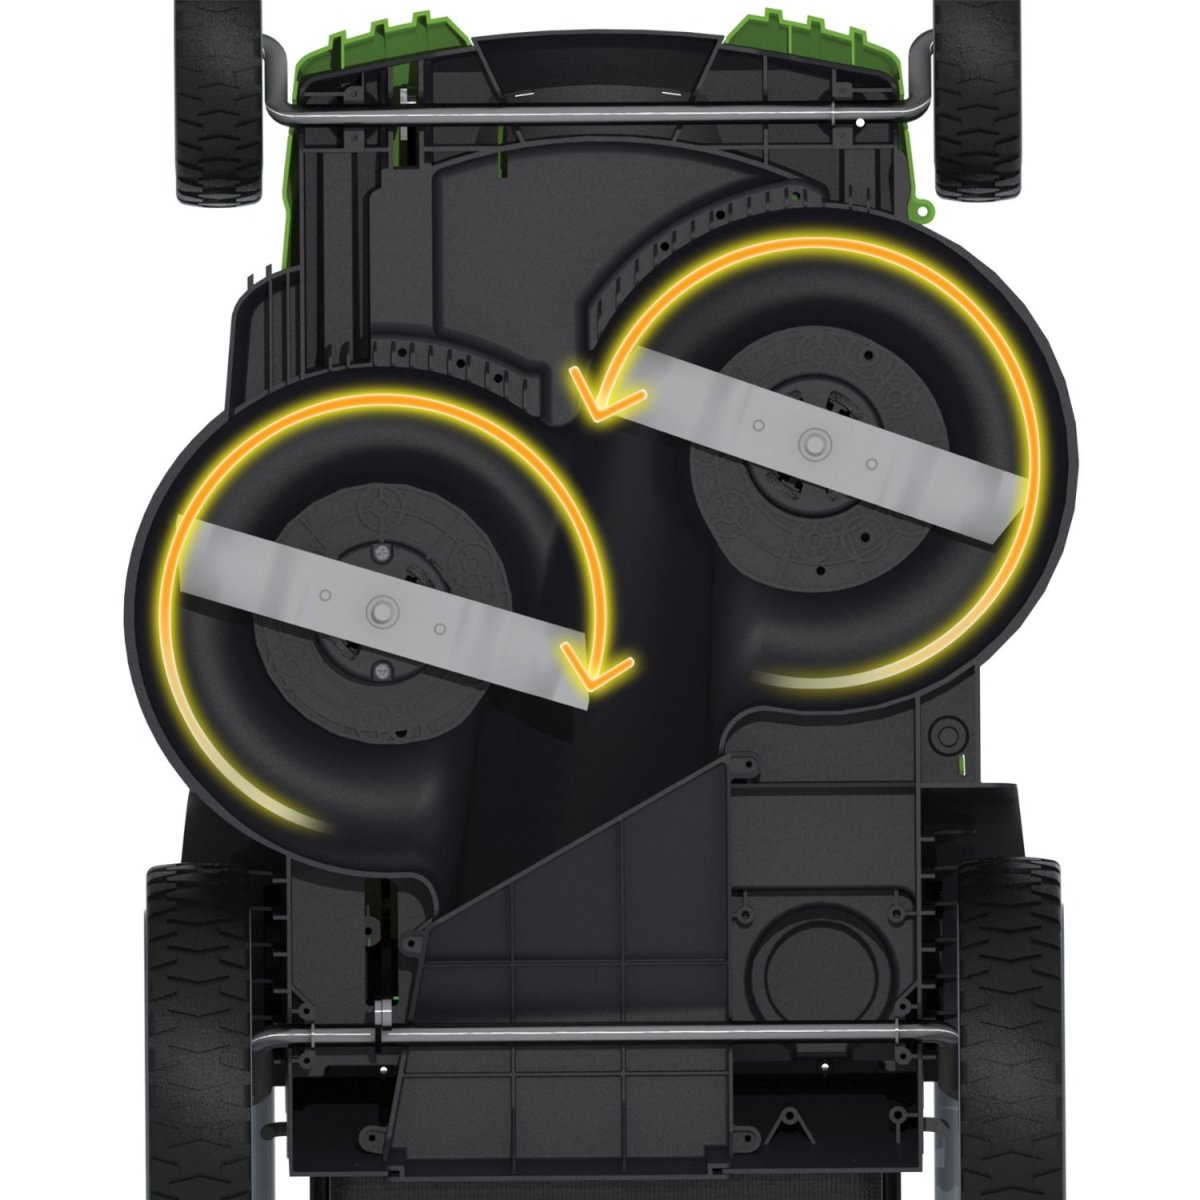 Review of the Black & Decker CM2043C Cordless Lawn Mower - Dengarden